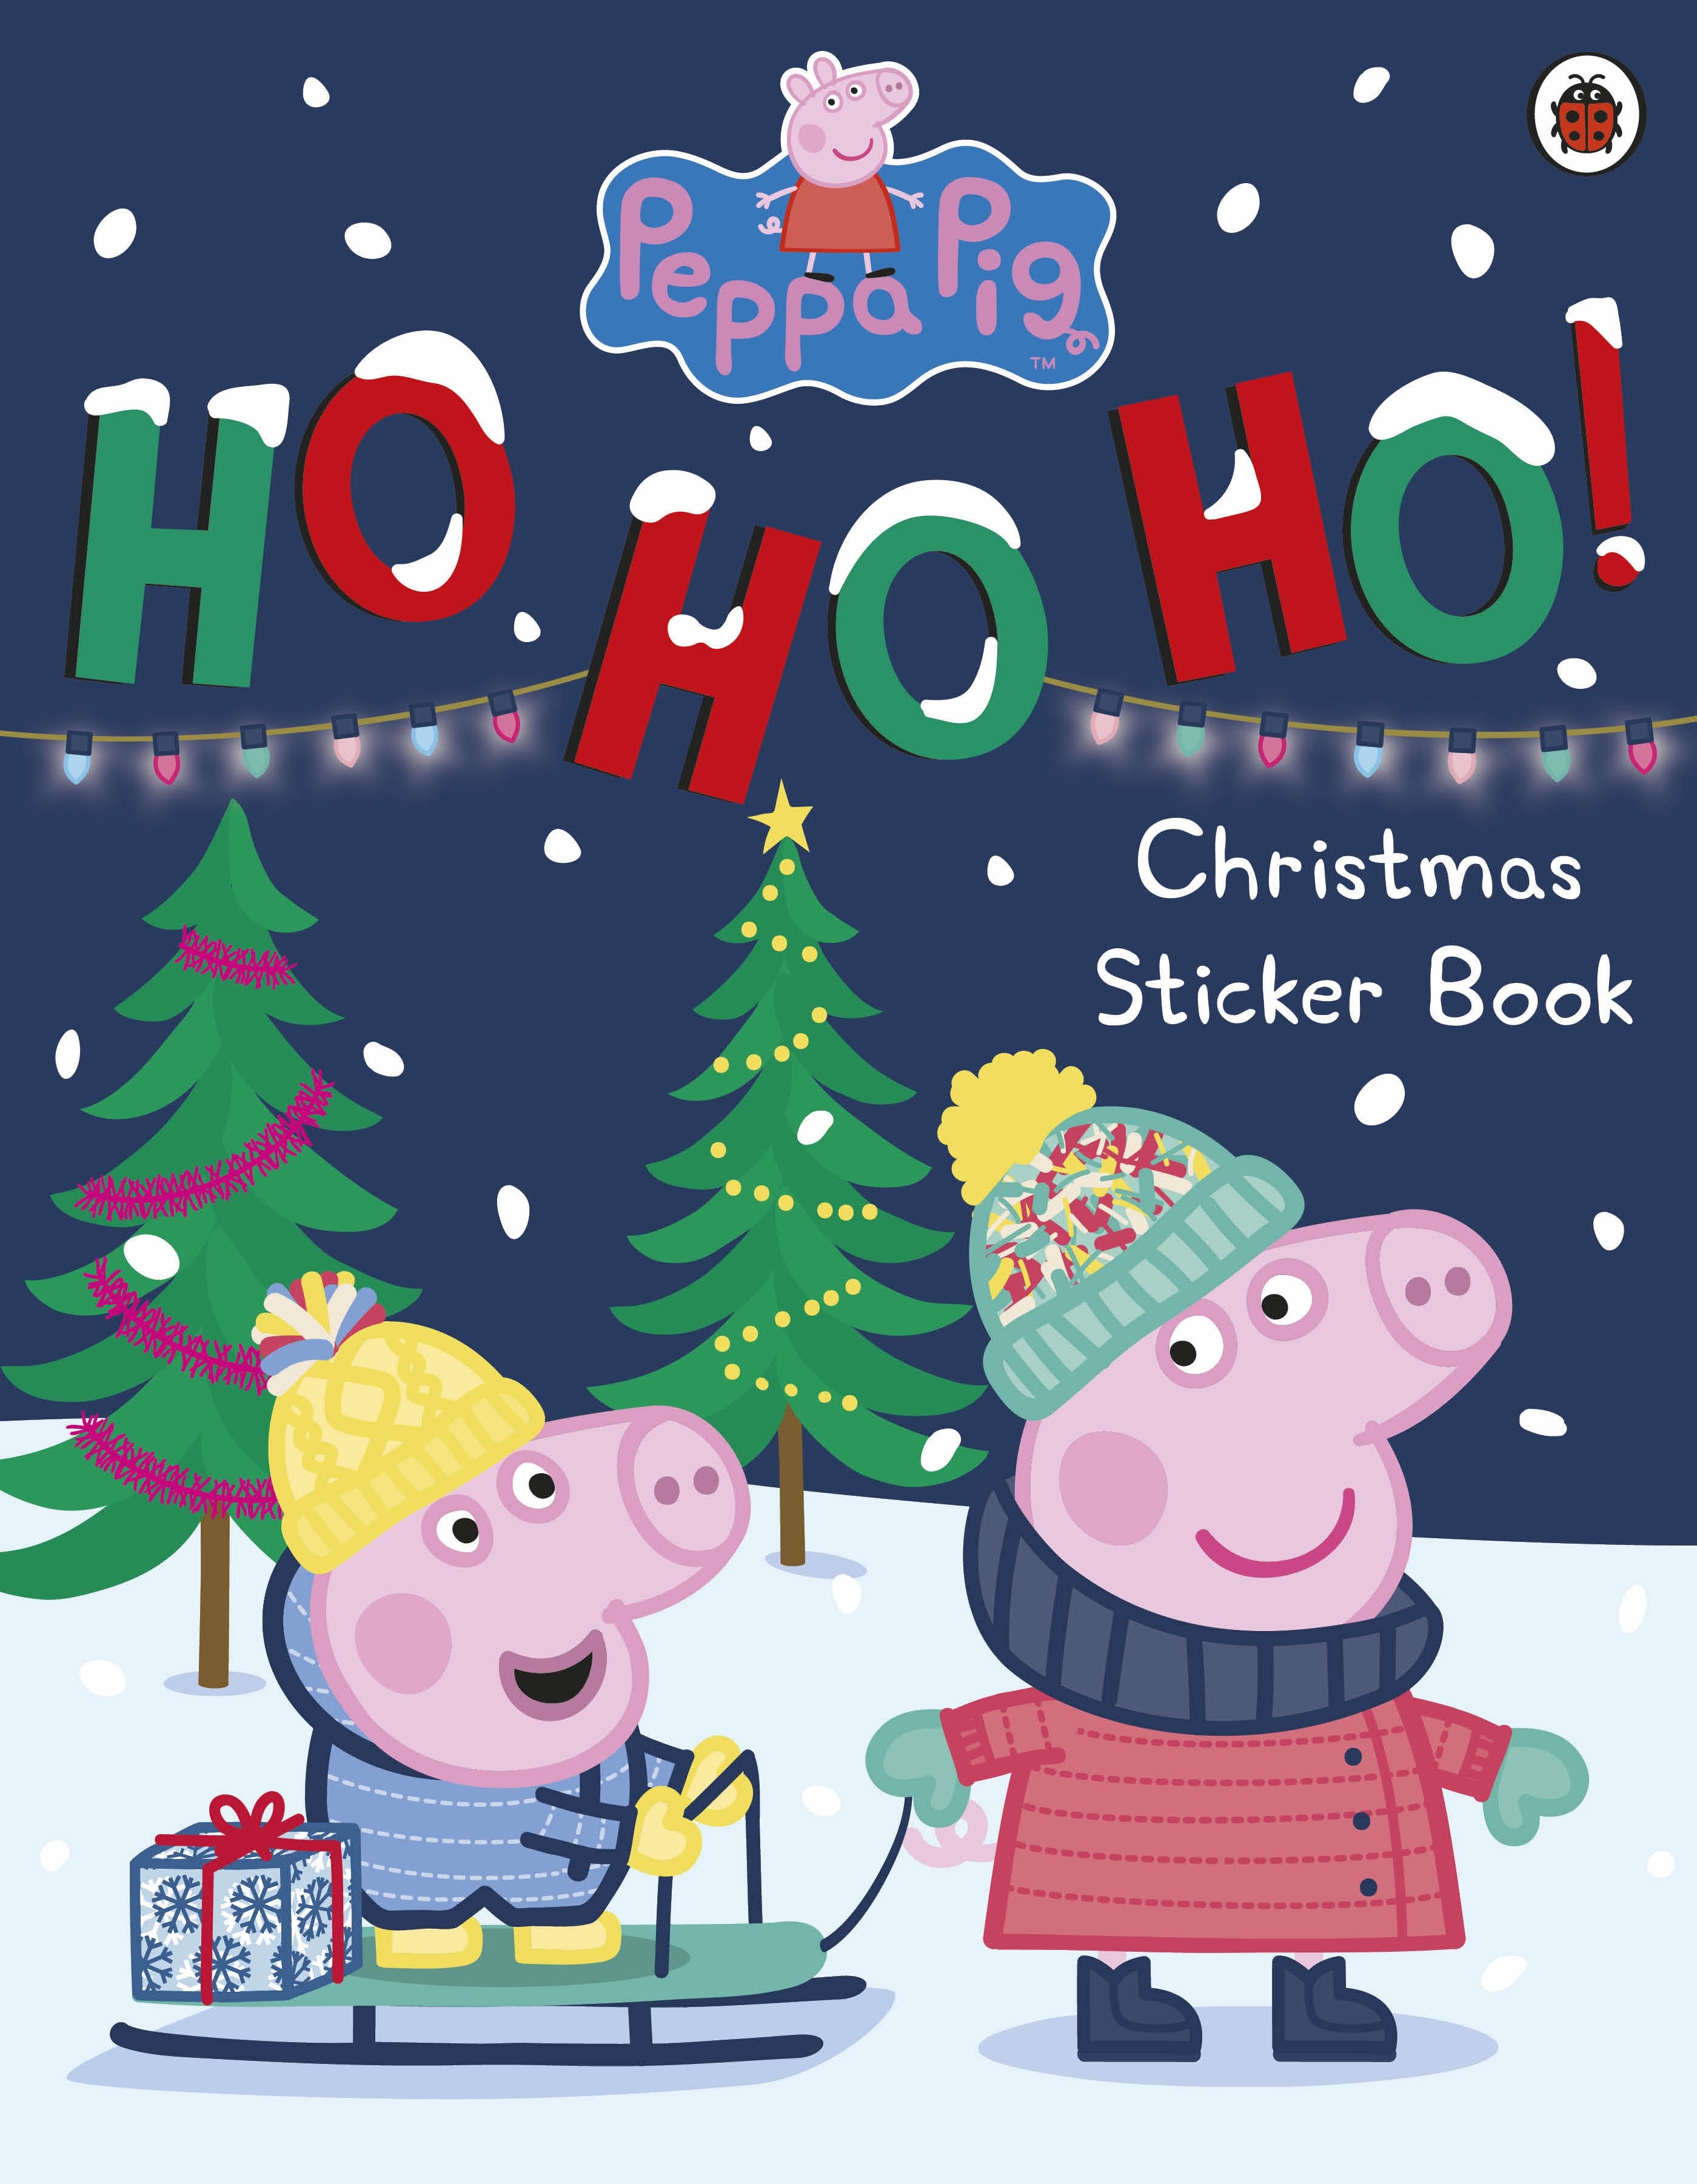 Book “Peppa Pig: Ho Ho Ho! Christmas Sticker Book” by Peppa Pig — October 1, 2020